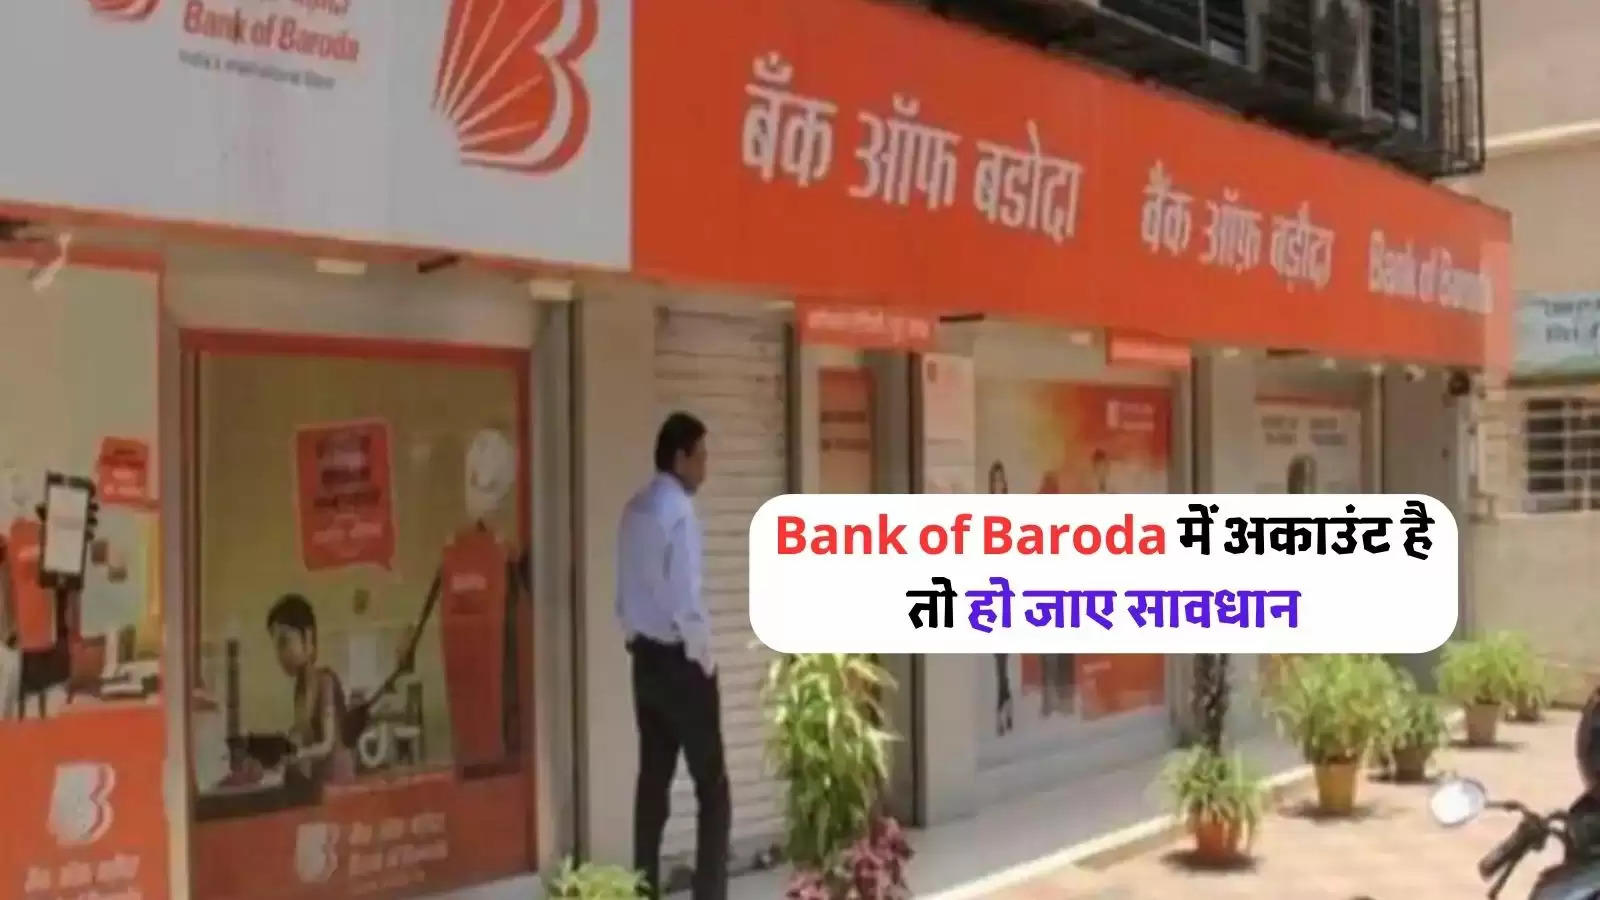 Bank of Baroda notice